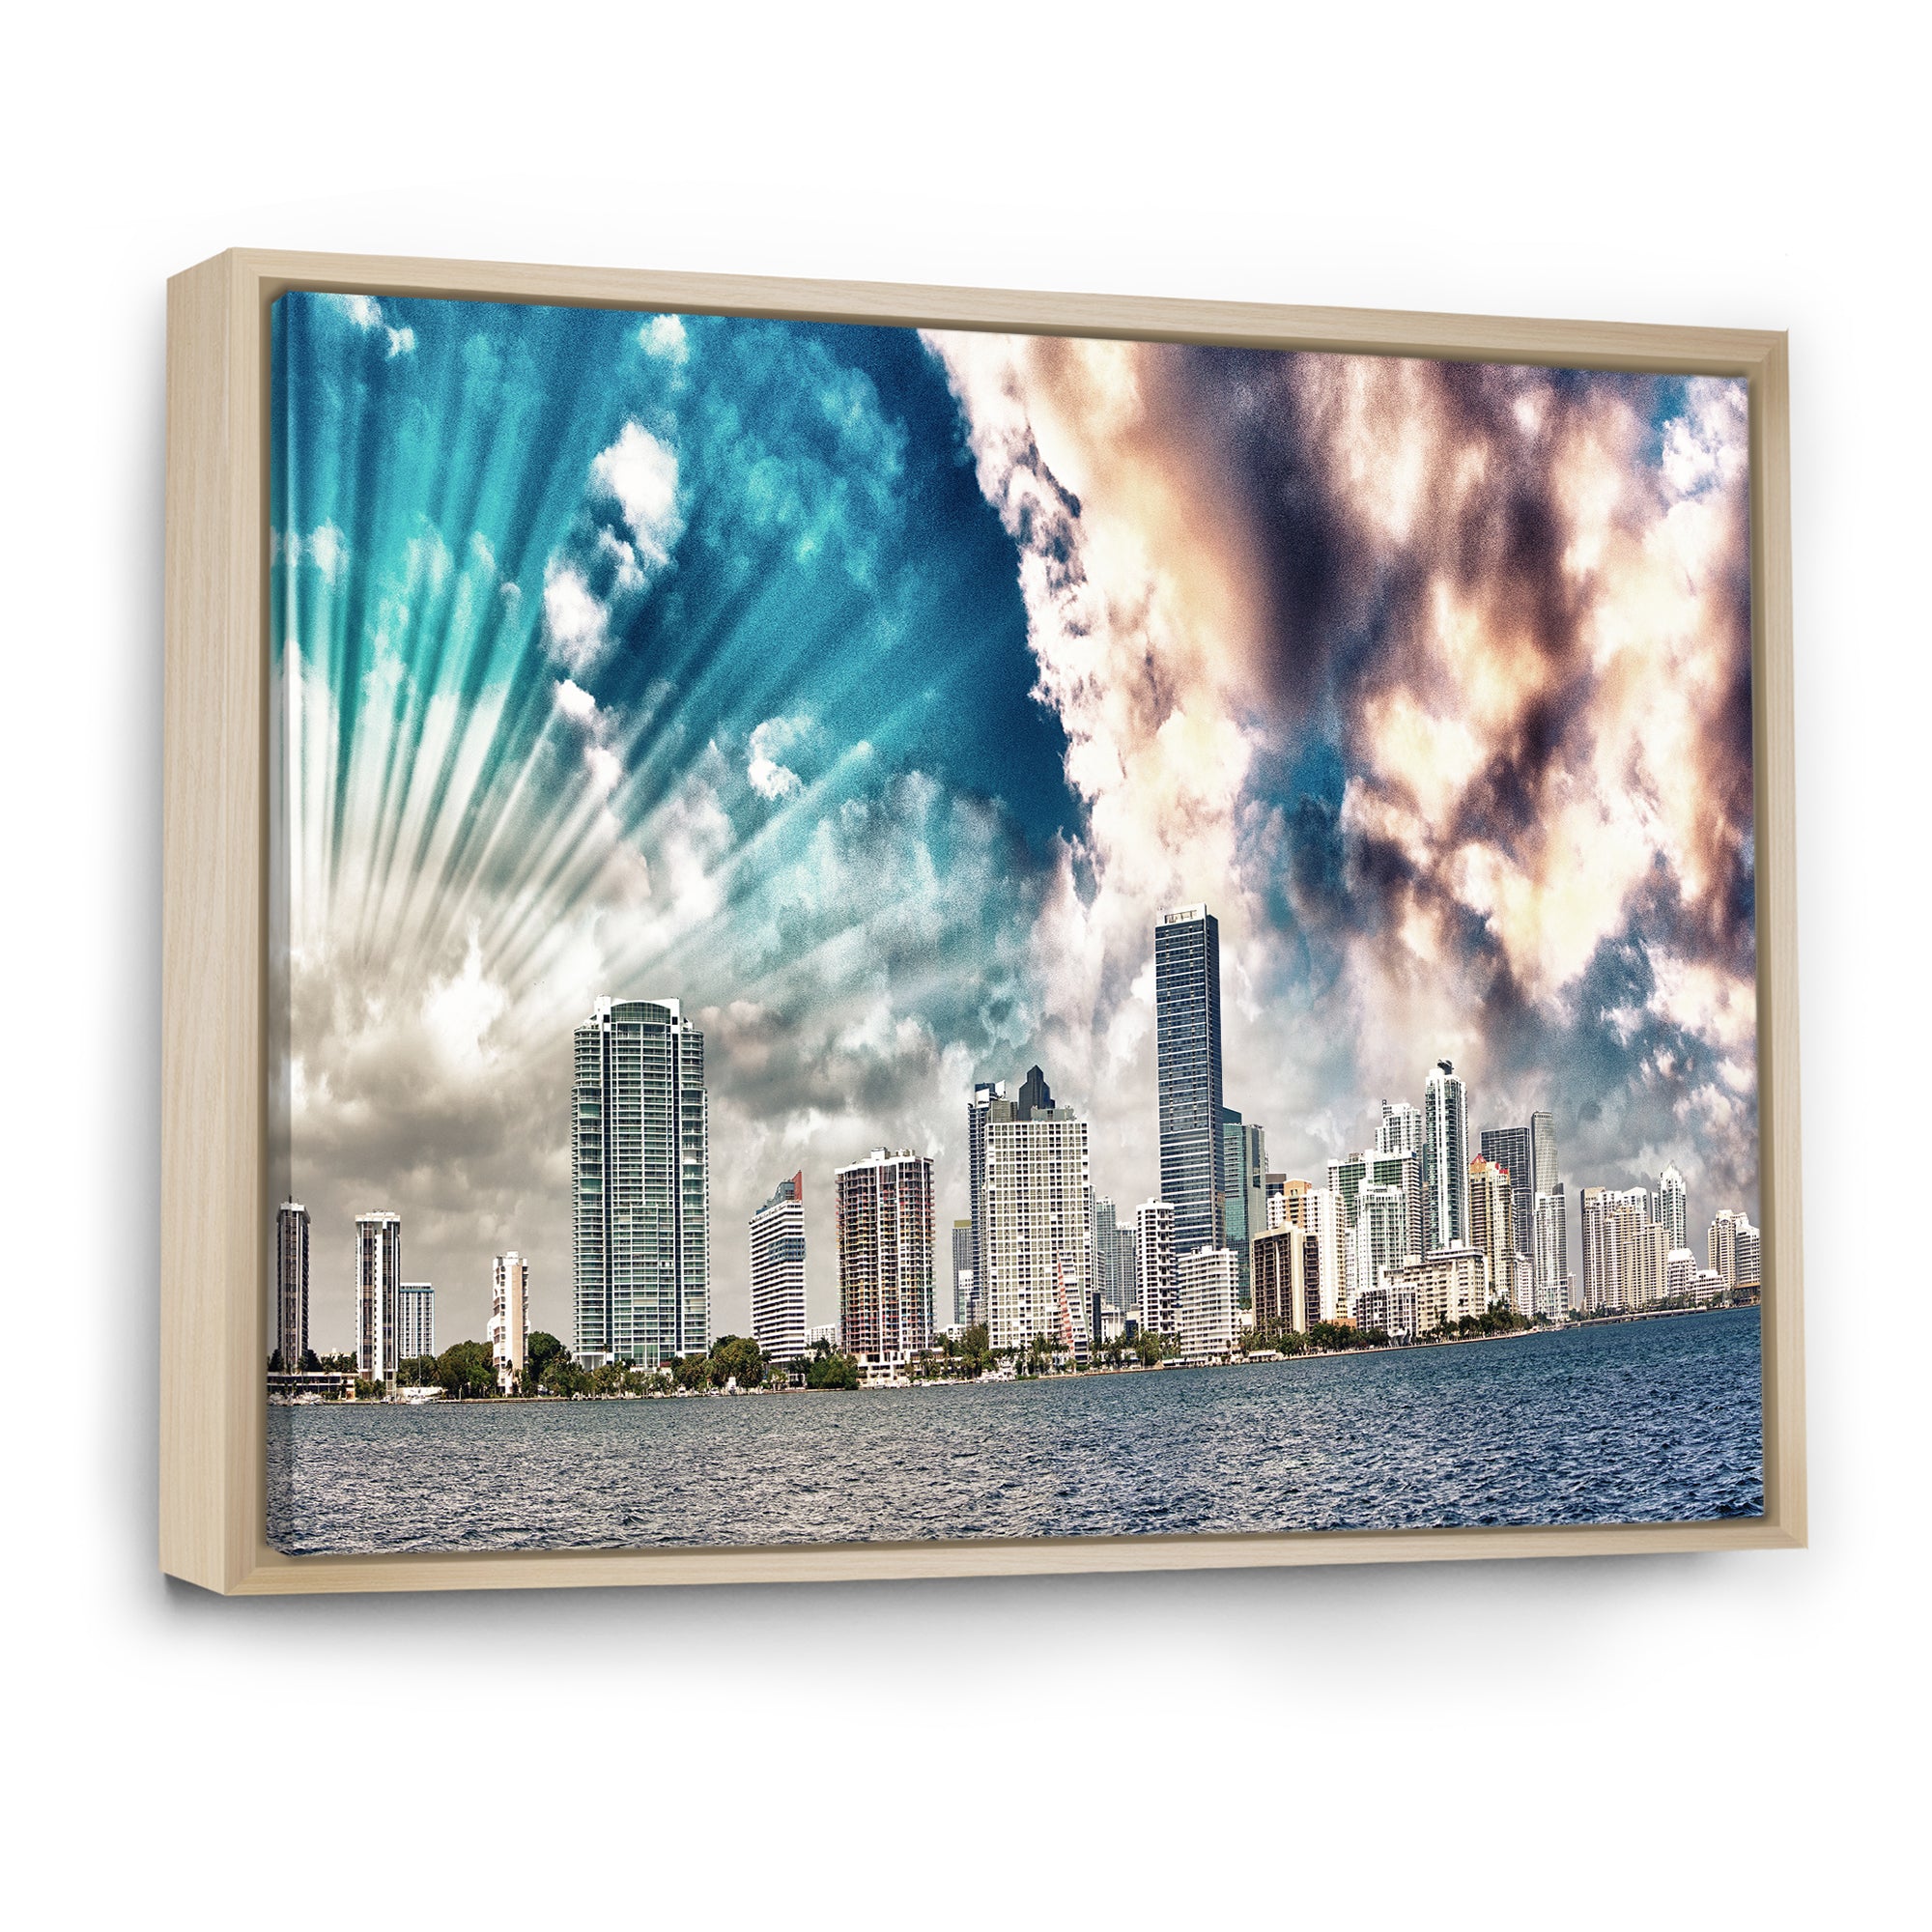 Miami Skyline with Clouds